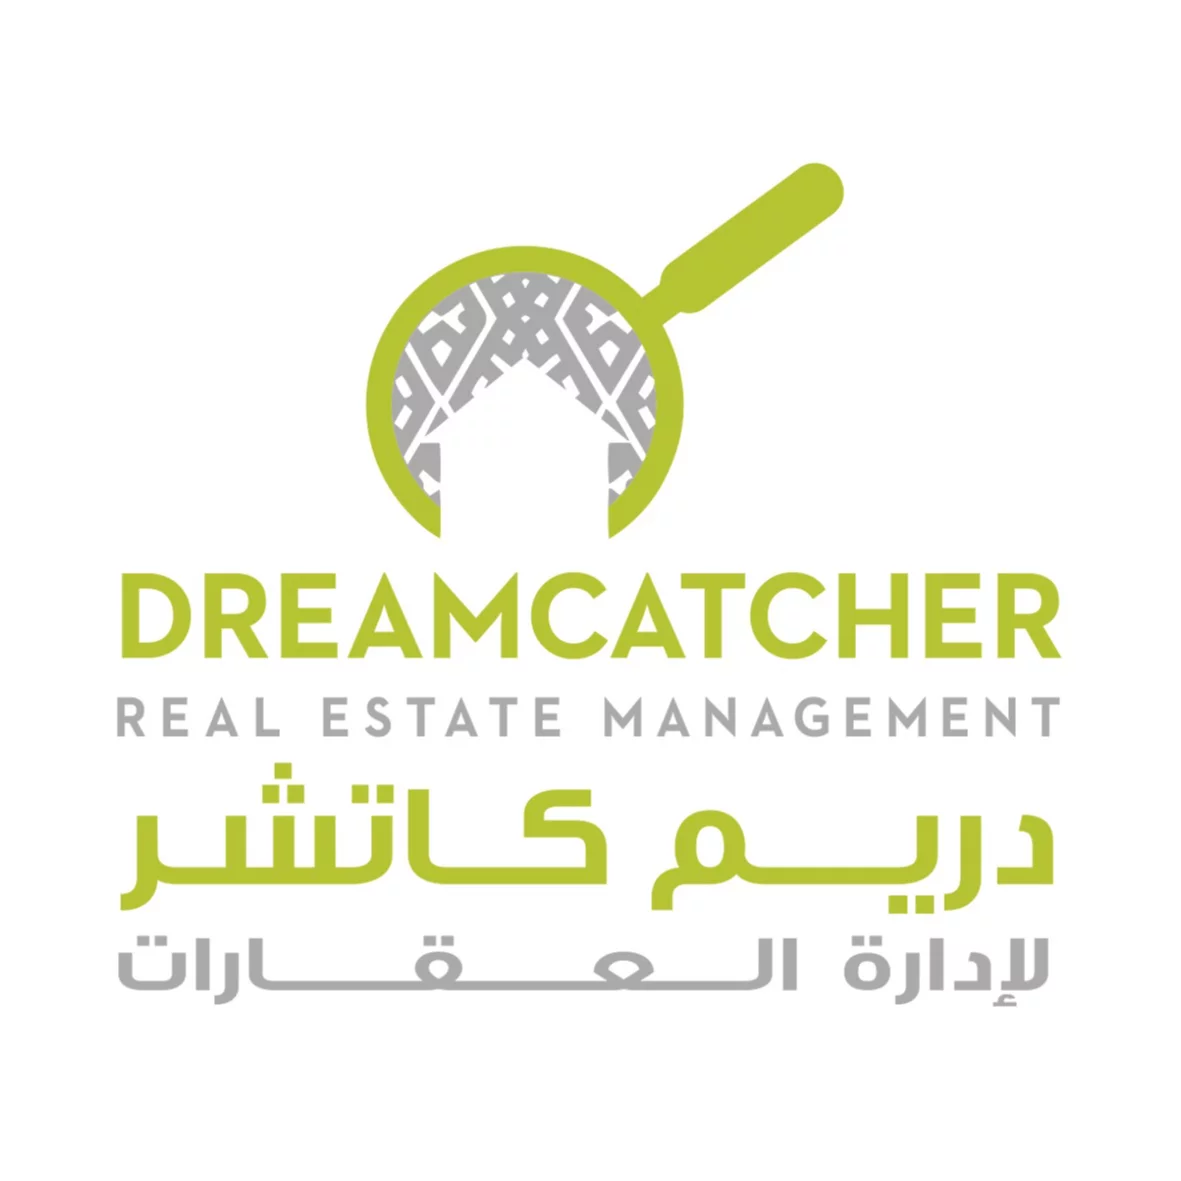 Dream catcher real estate management